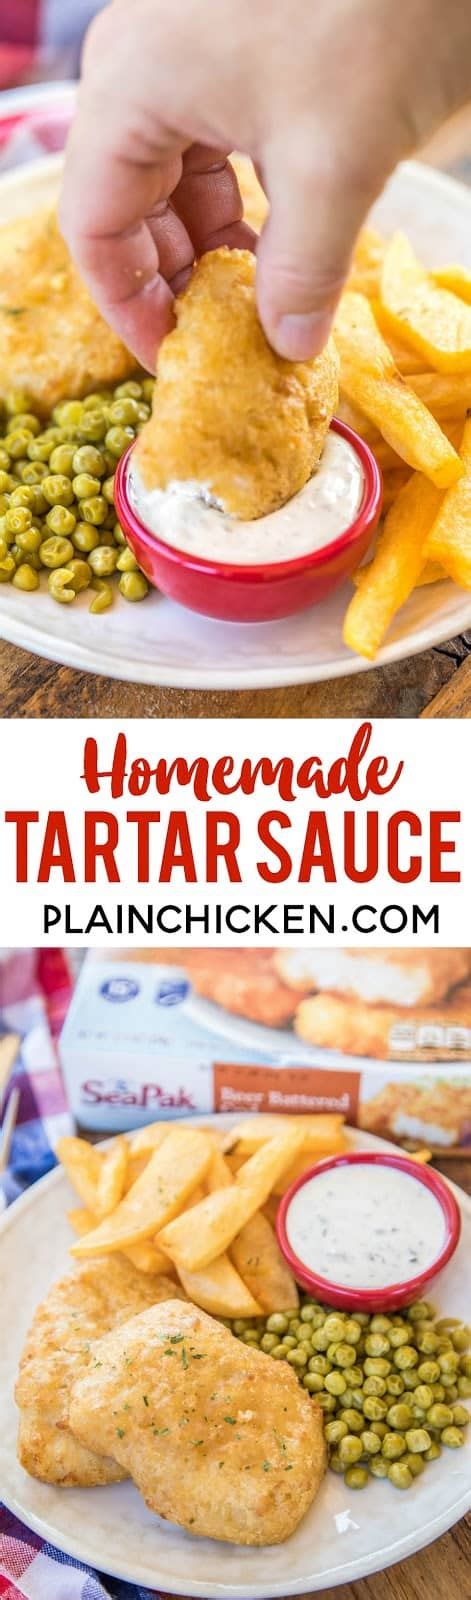 Homemade tartar sauce is so easy to make yourself. Homemade Tartar Sauce - Plain Chicken